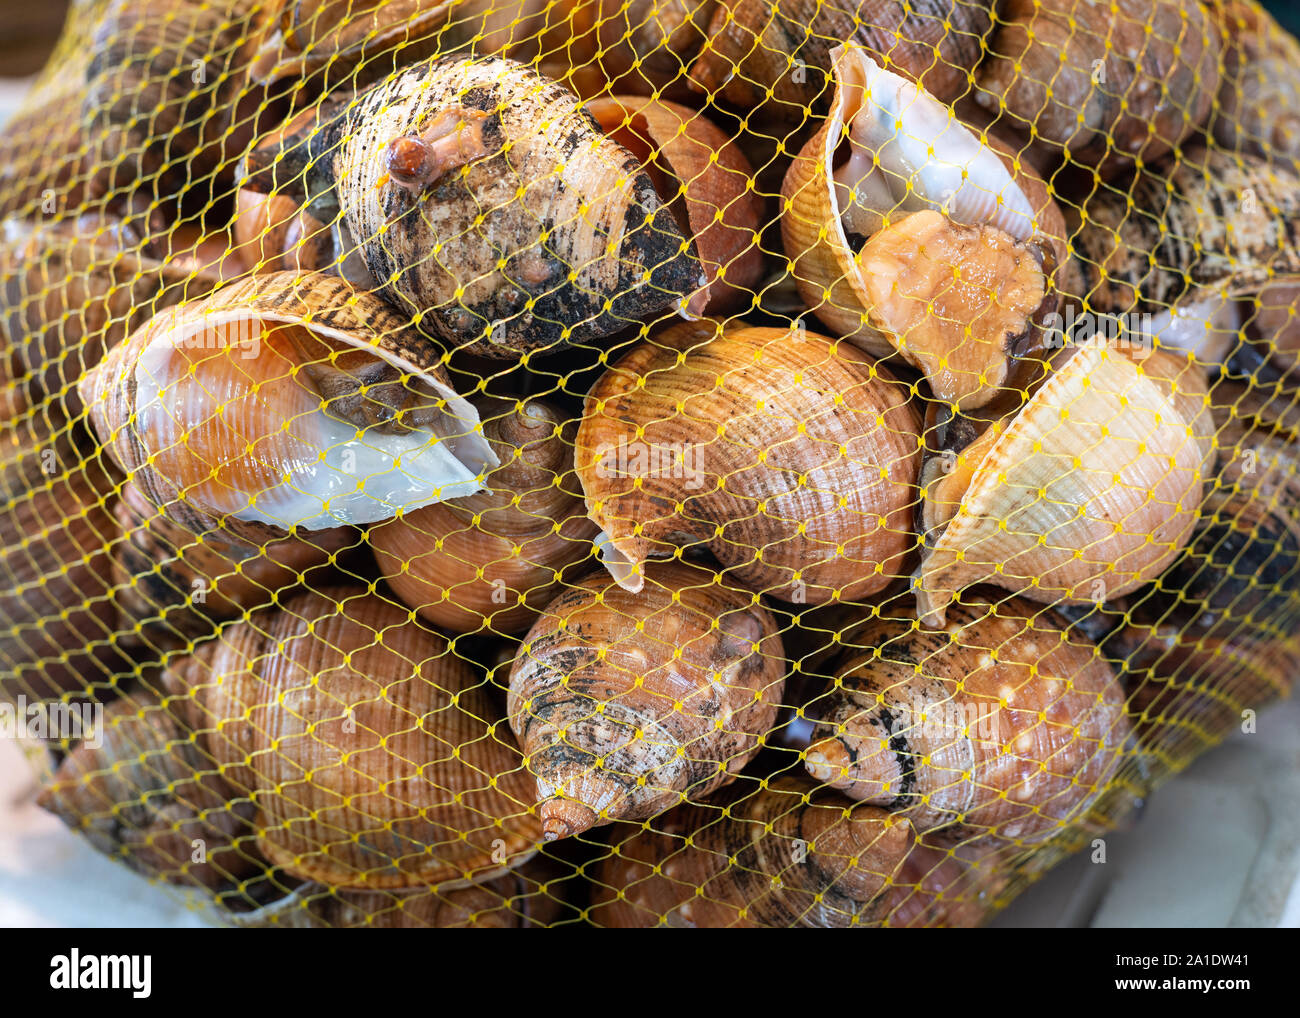 mesh bag of live snail shells in fish market Stock Photo